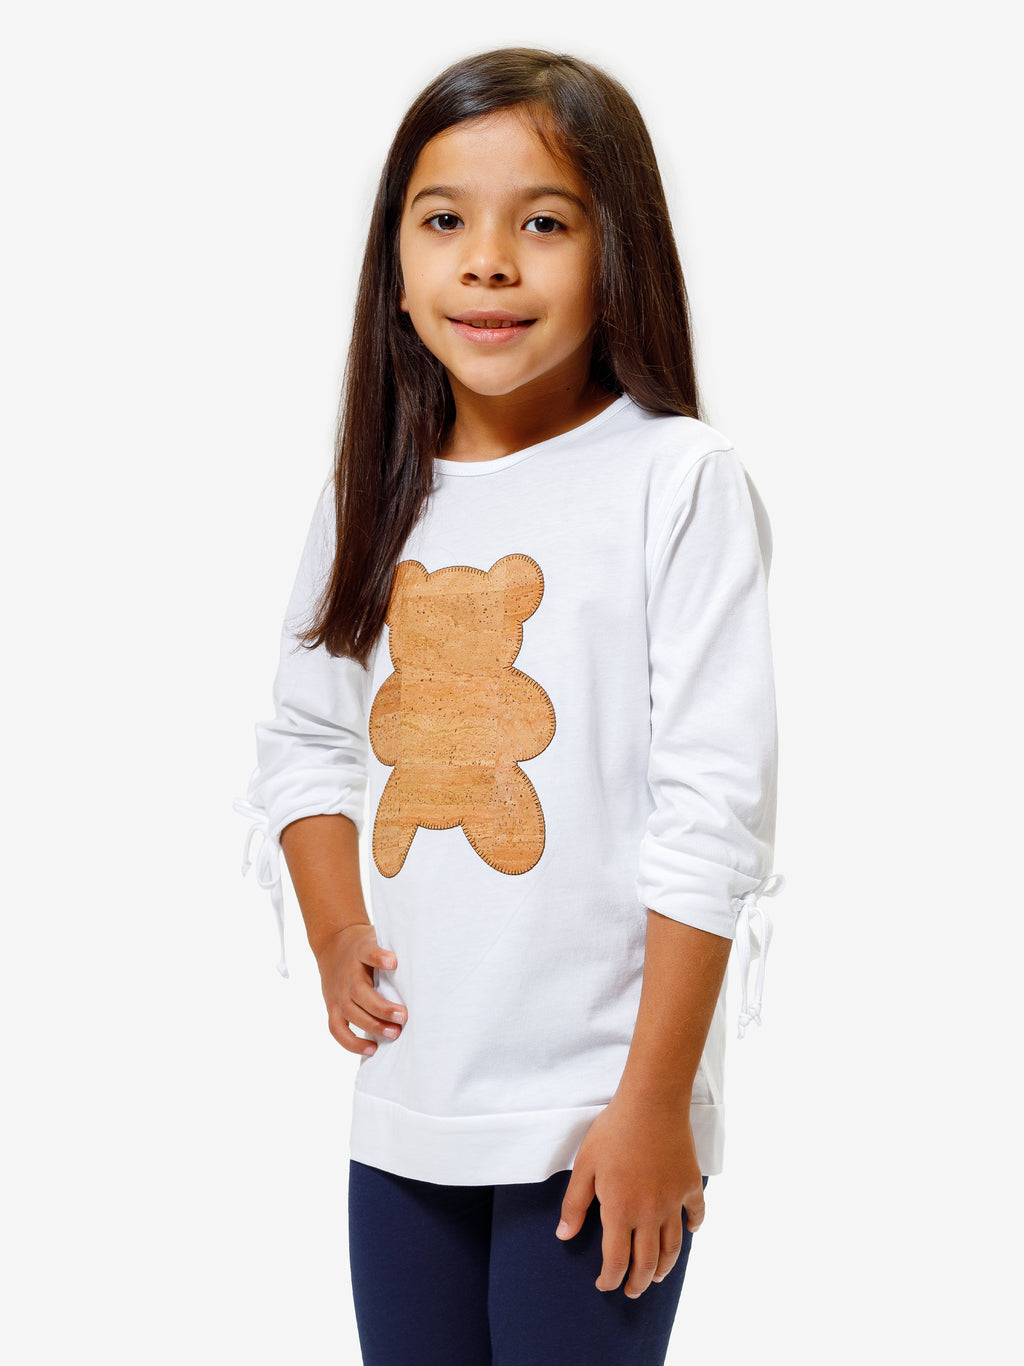 TEDDY BEAR Top White Side T-shirt